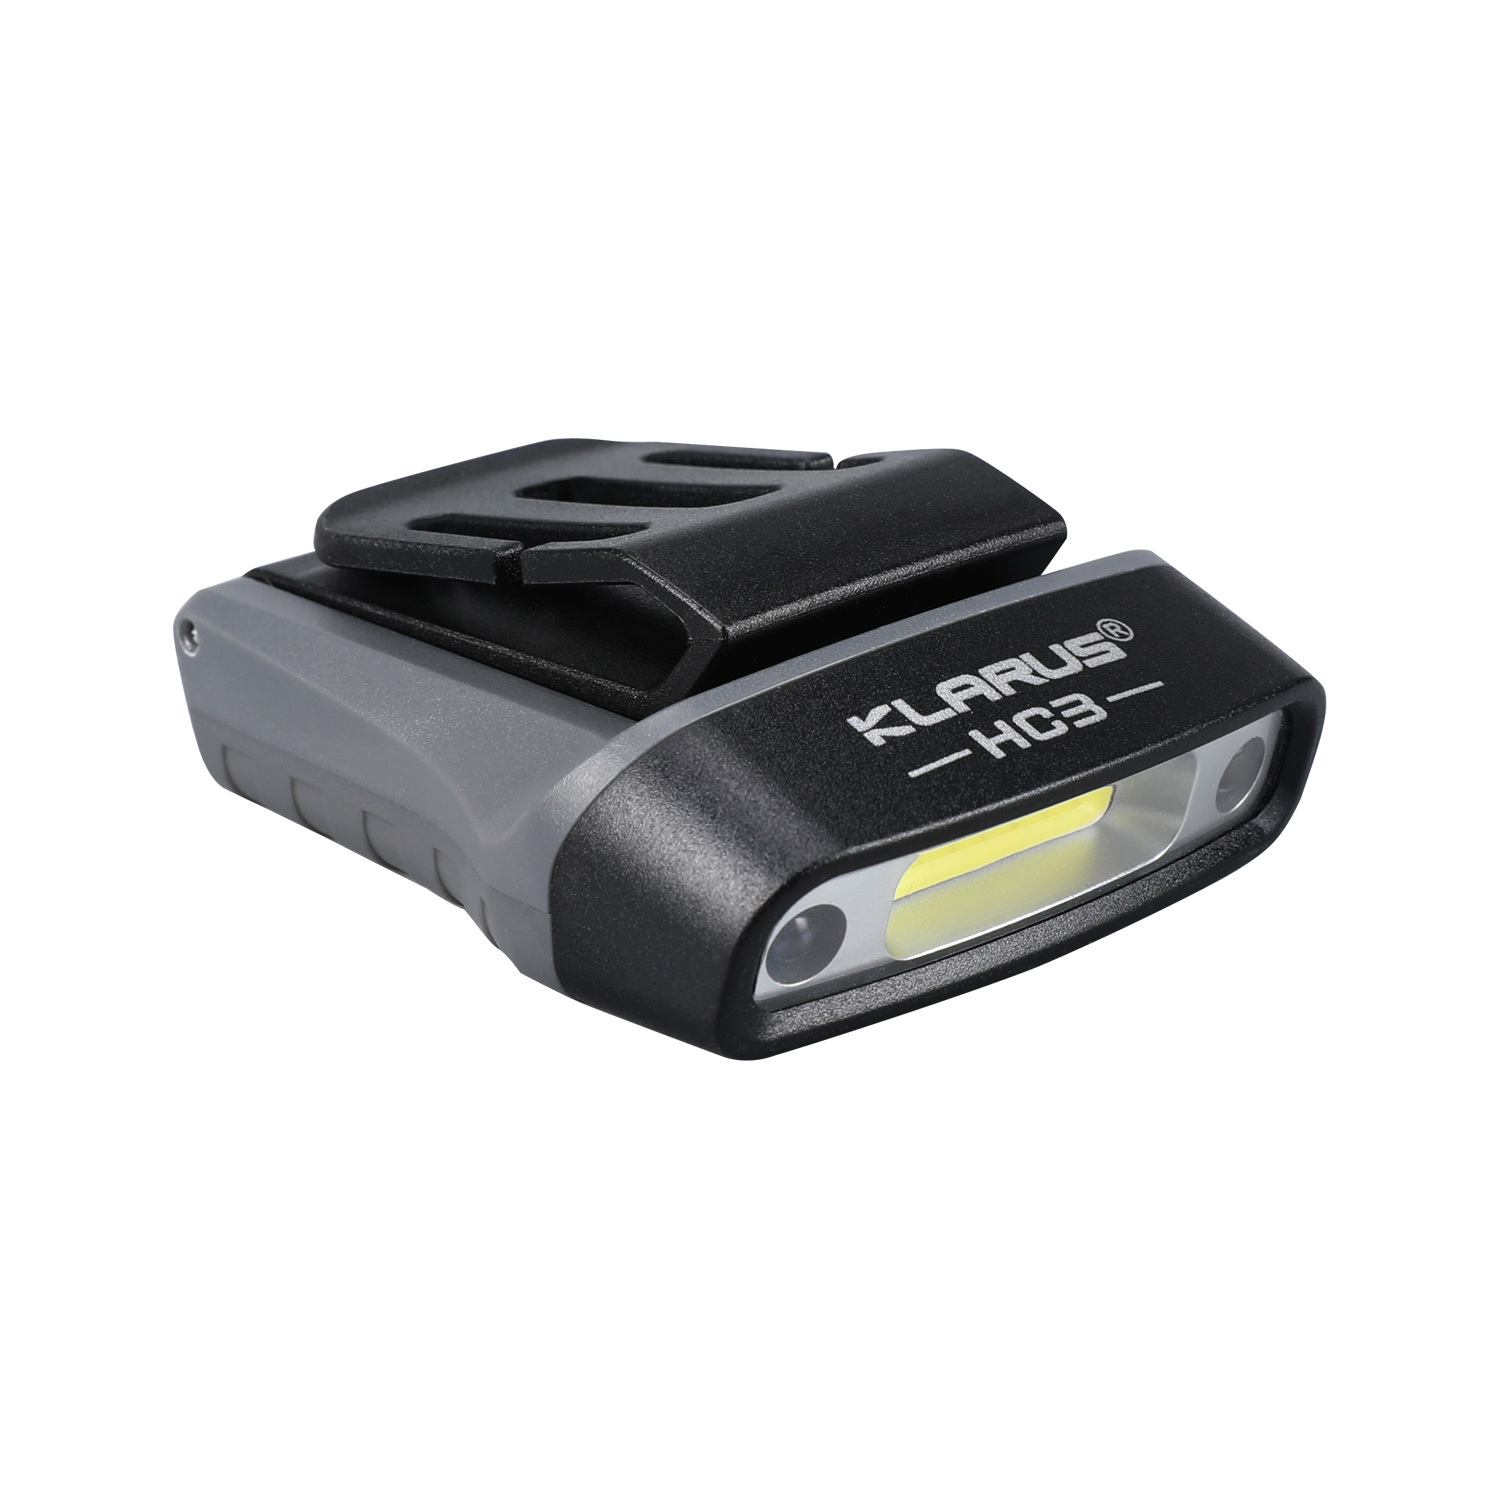 Klarus HC3 100 Lumens Rechargeable Motion Sensor LED Headlamp